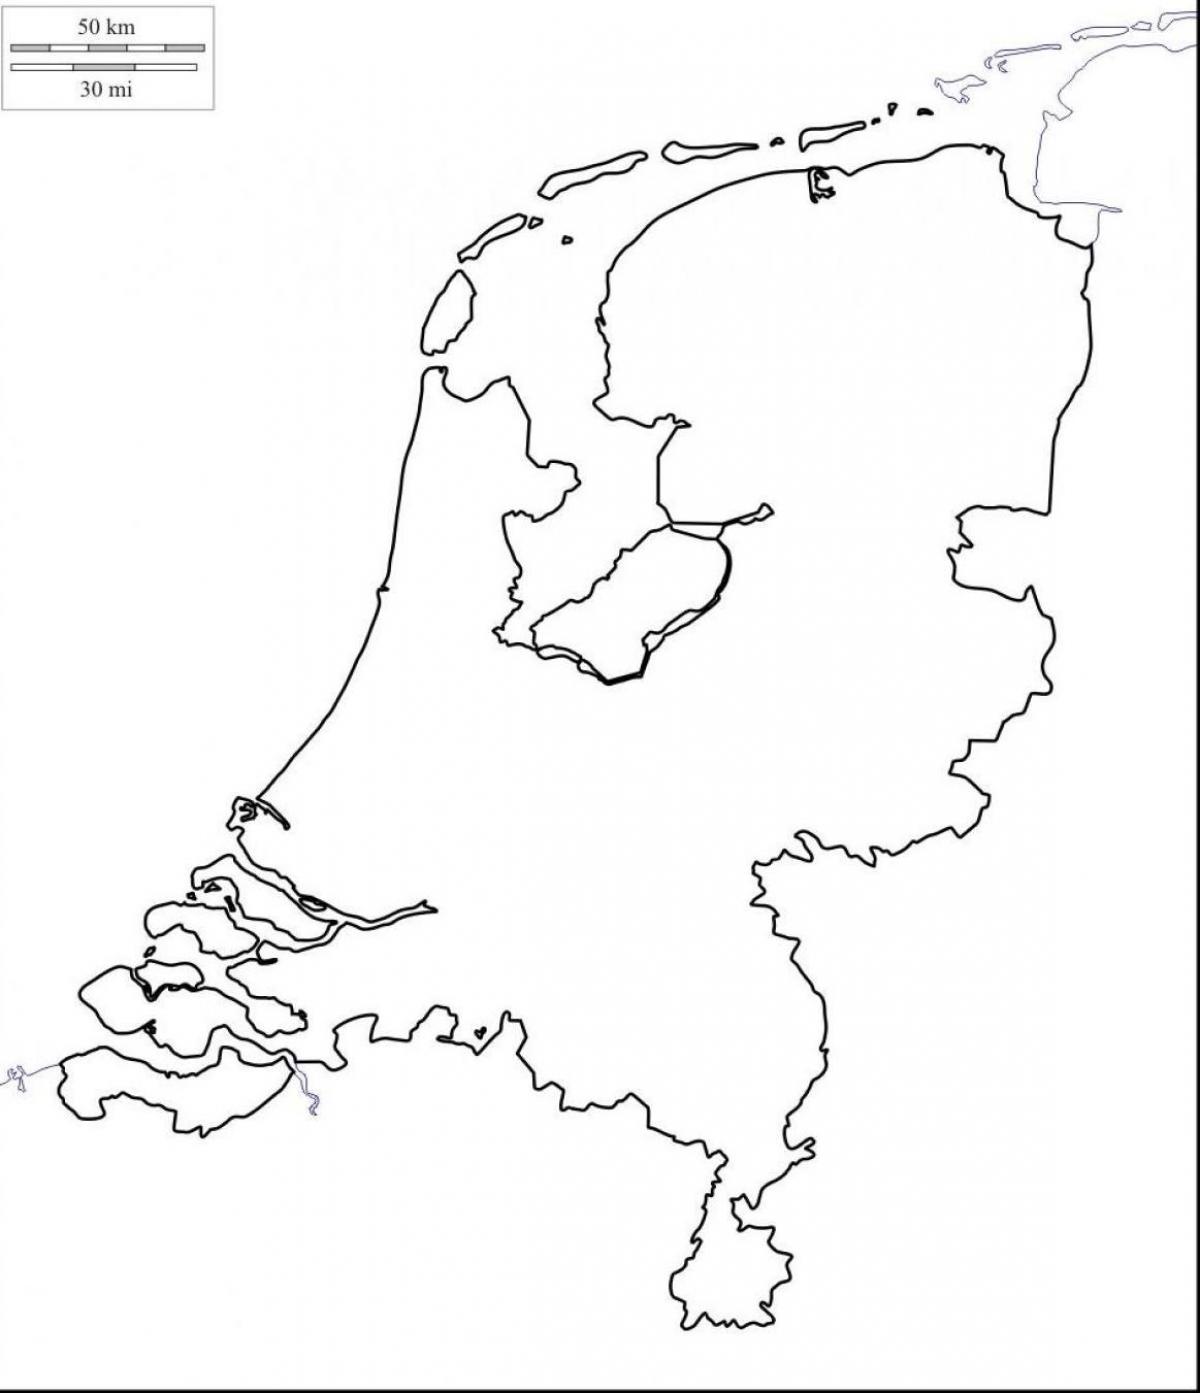 Lege Nederlandse kaart